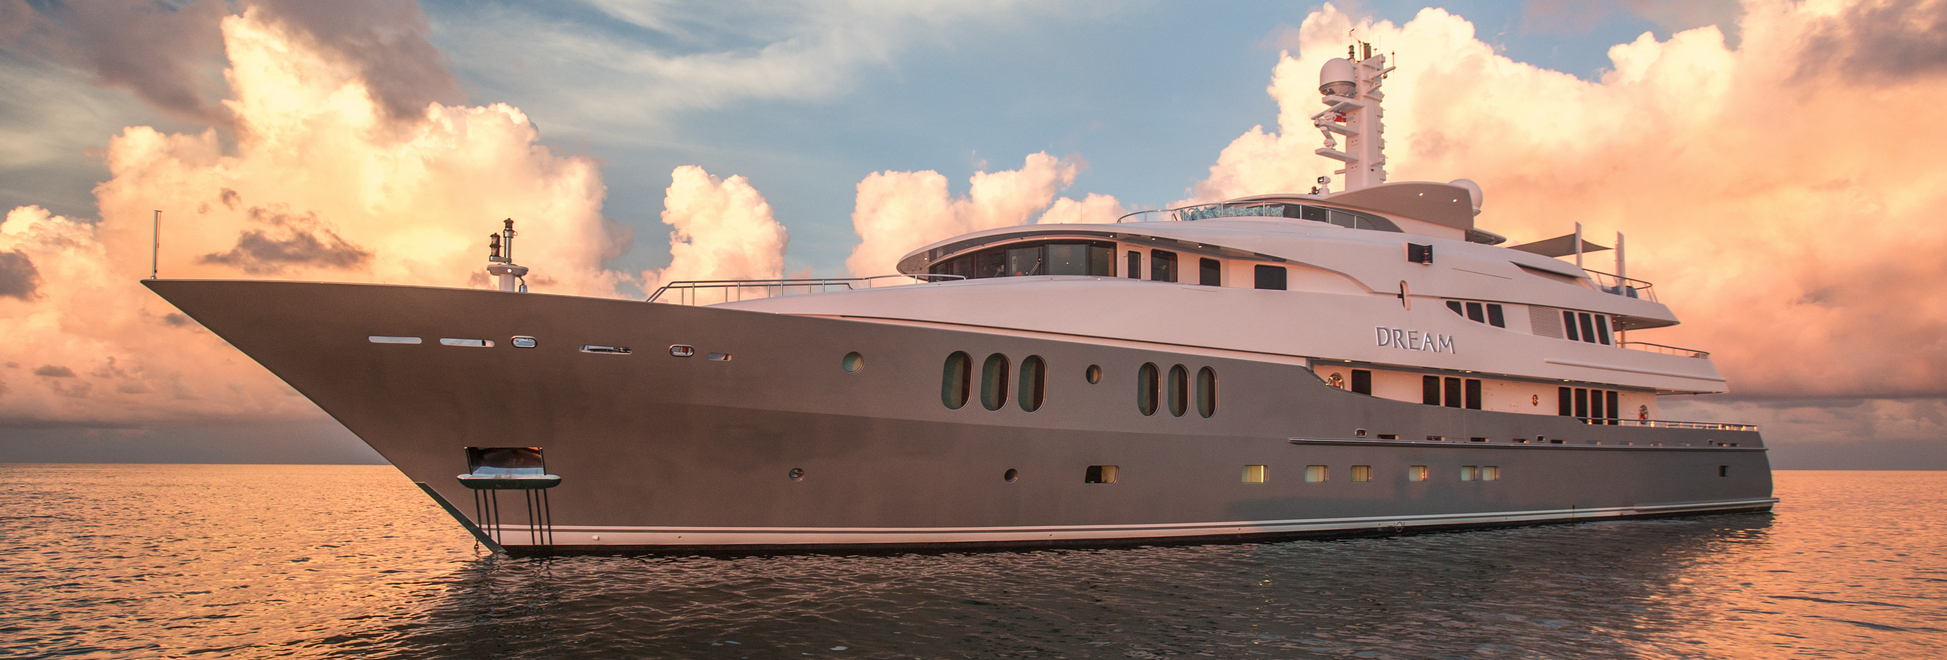 dream yacht charter group